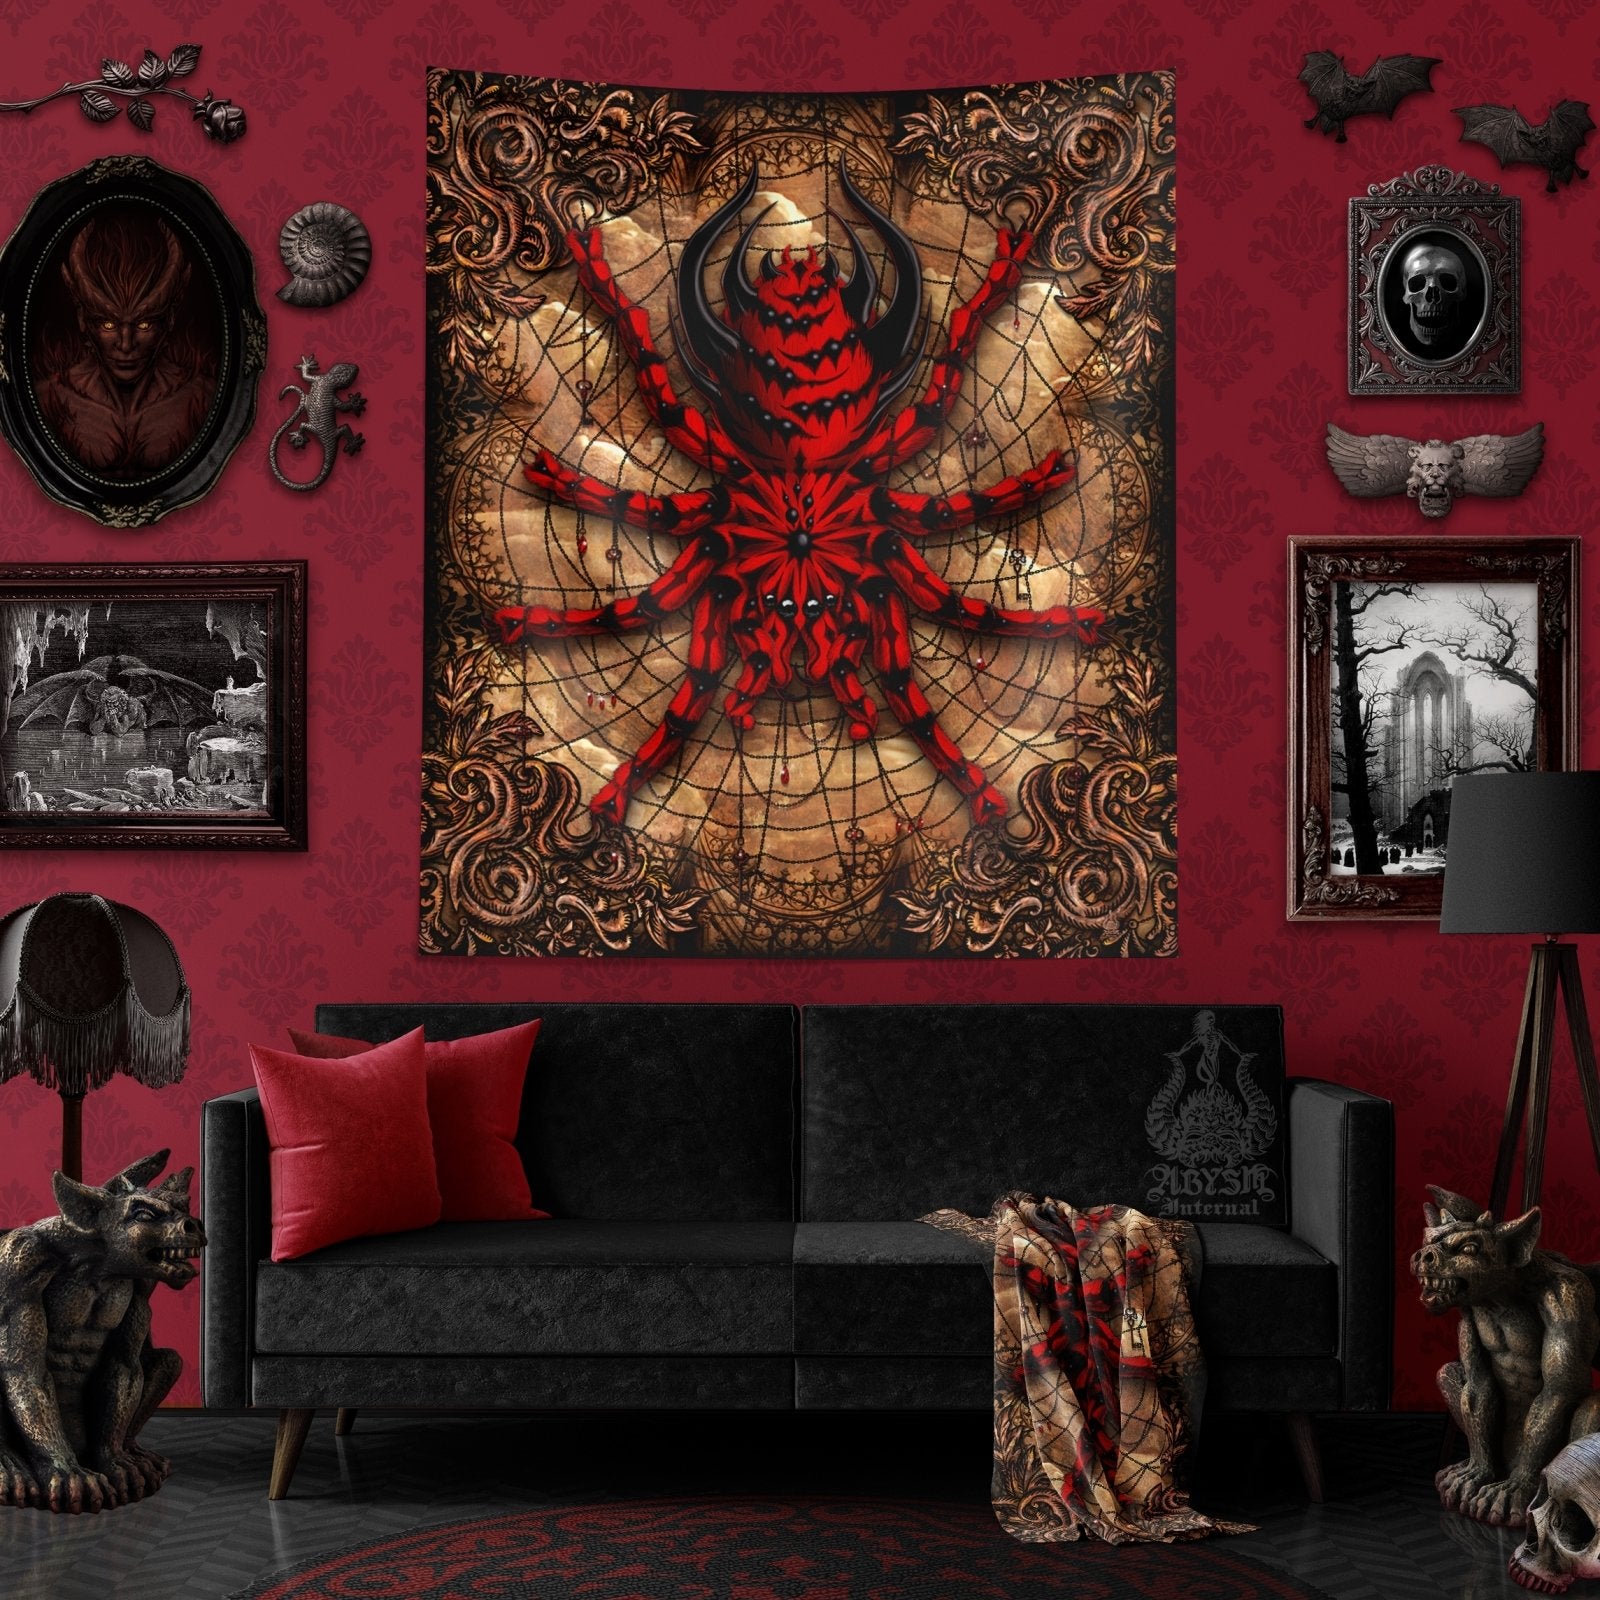 Gothic Tapestry, Horror Wall Hanging, Halloween Home Decor, Tarantula Art Print - Spider, Gothic Beige - Abysm Internal